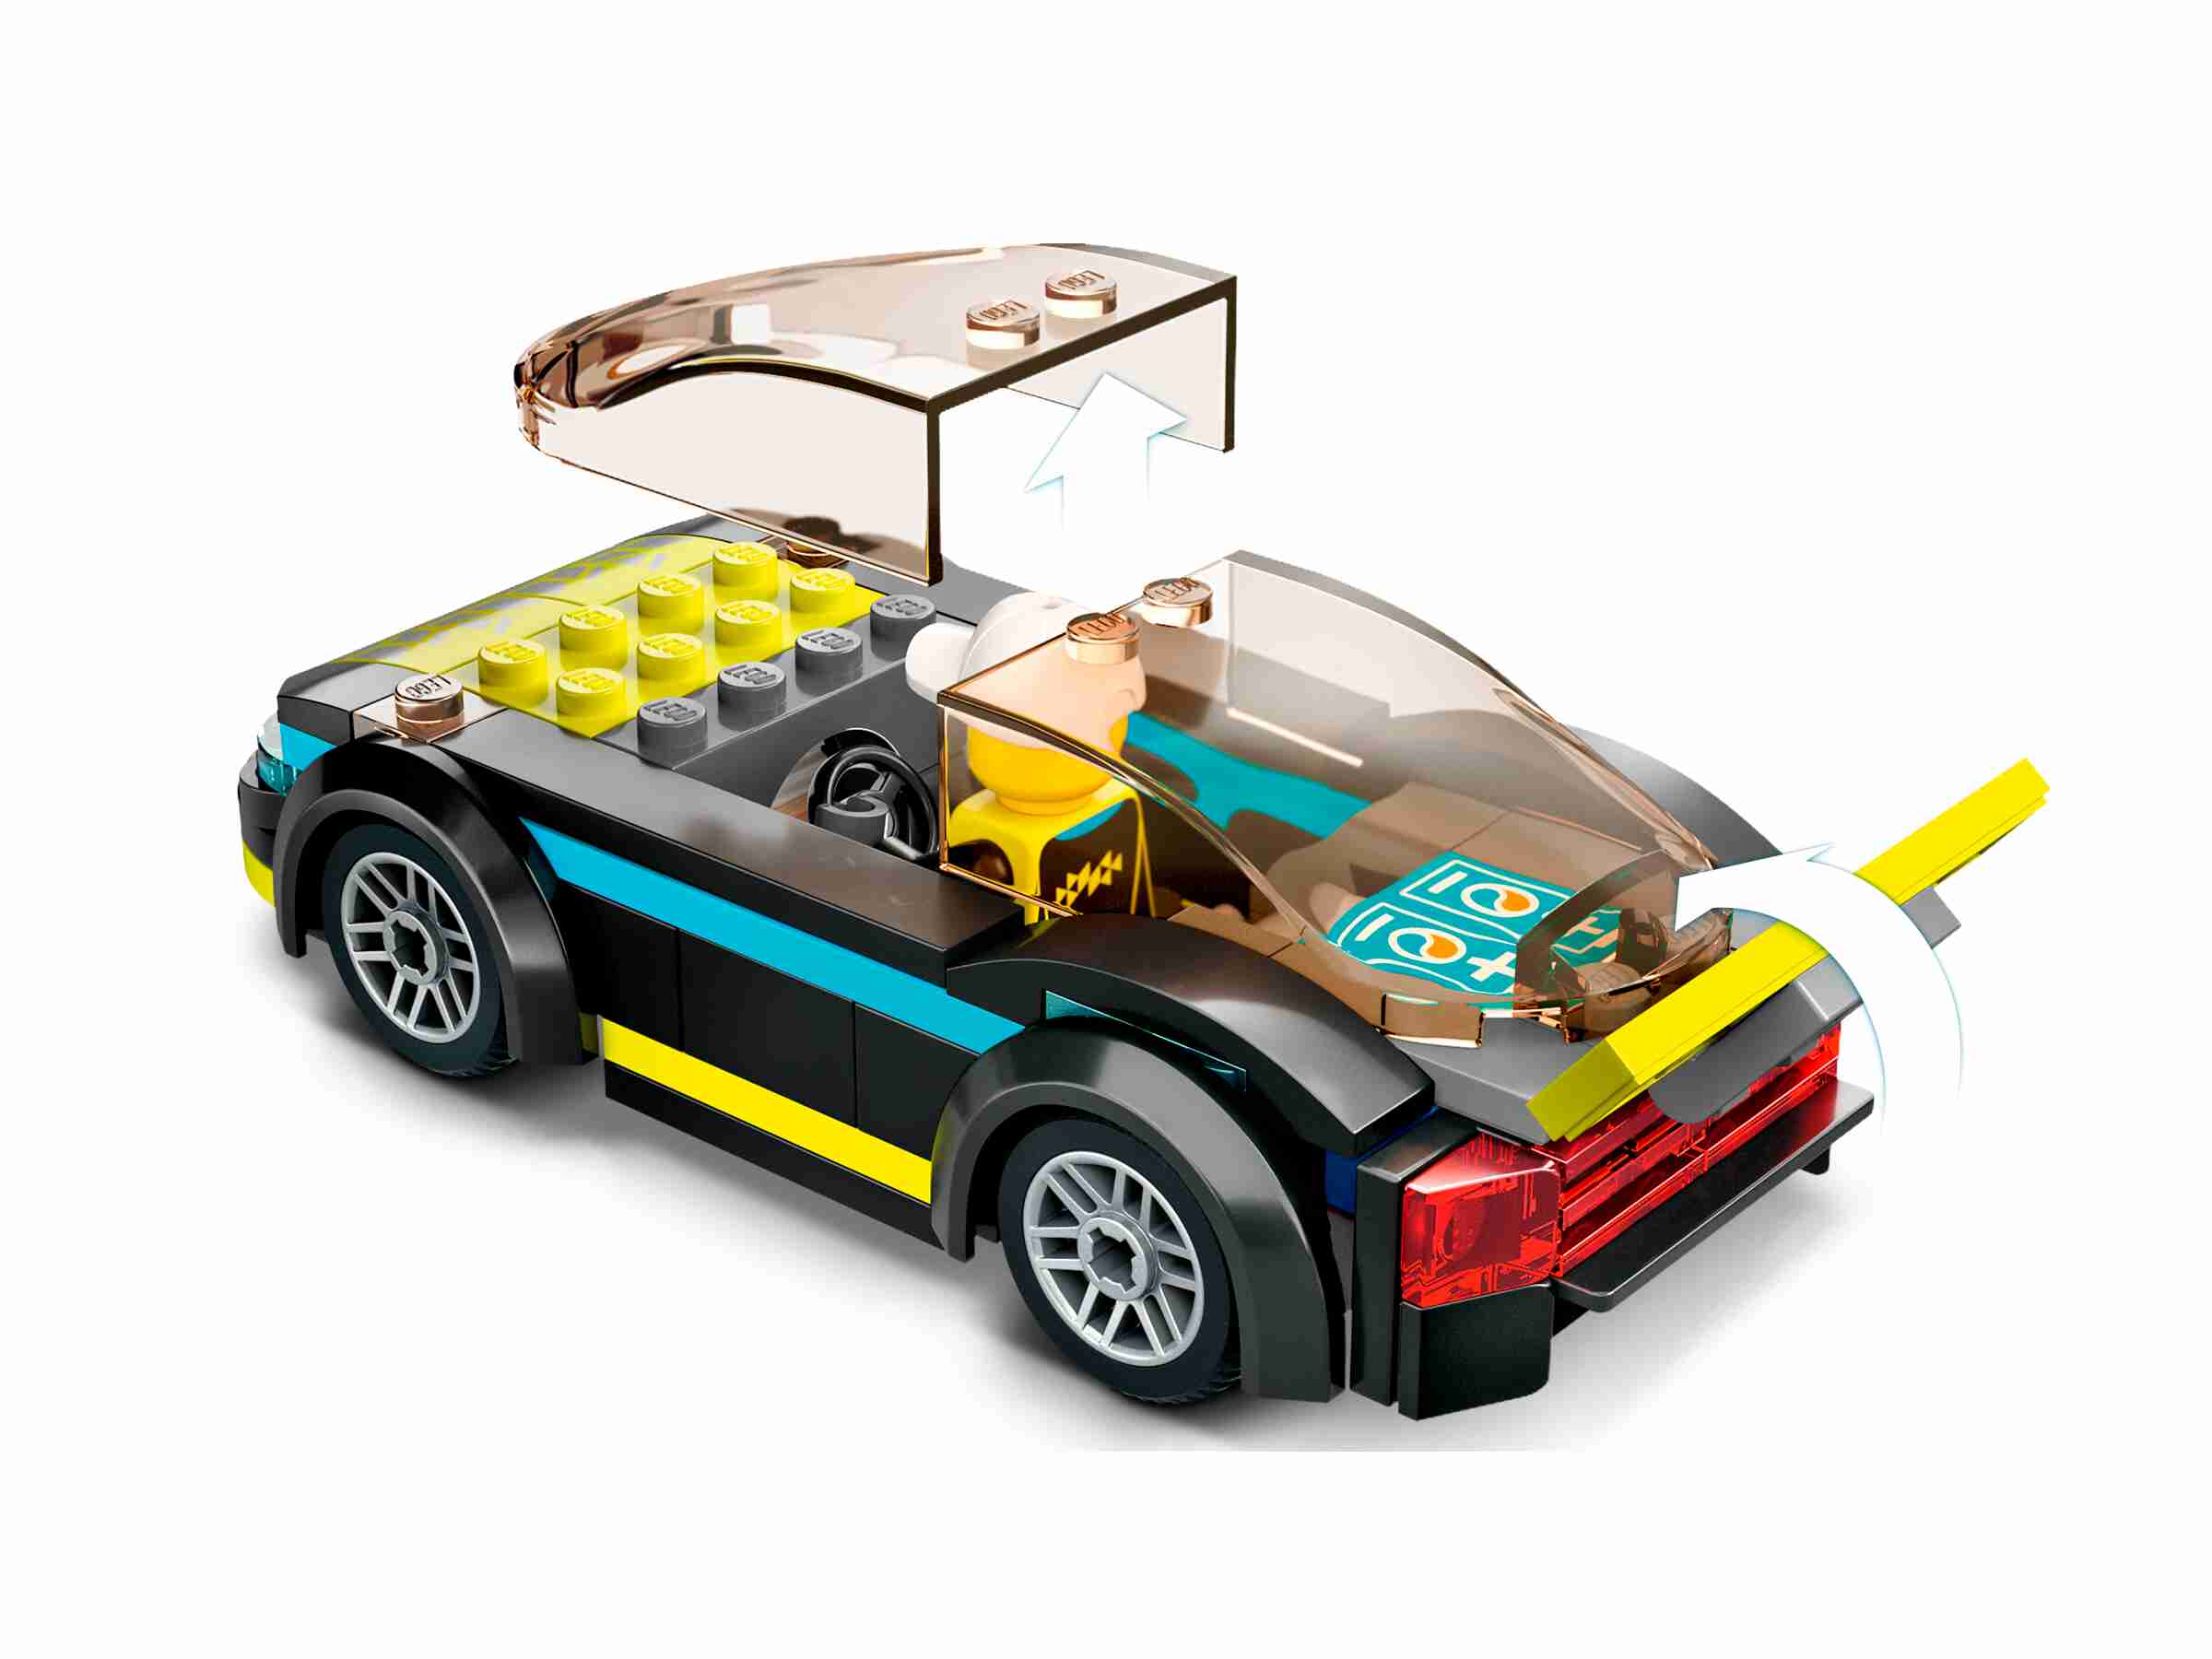 LEGO 60383 City Elektro-Sportwagen, Spielzeug-Ladestation, Starke Fahrzeuge